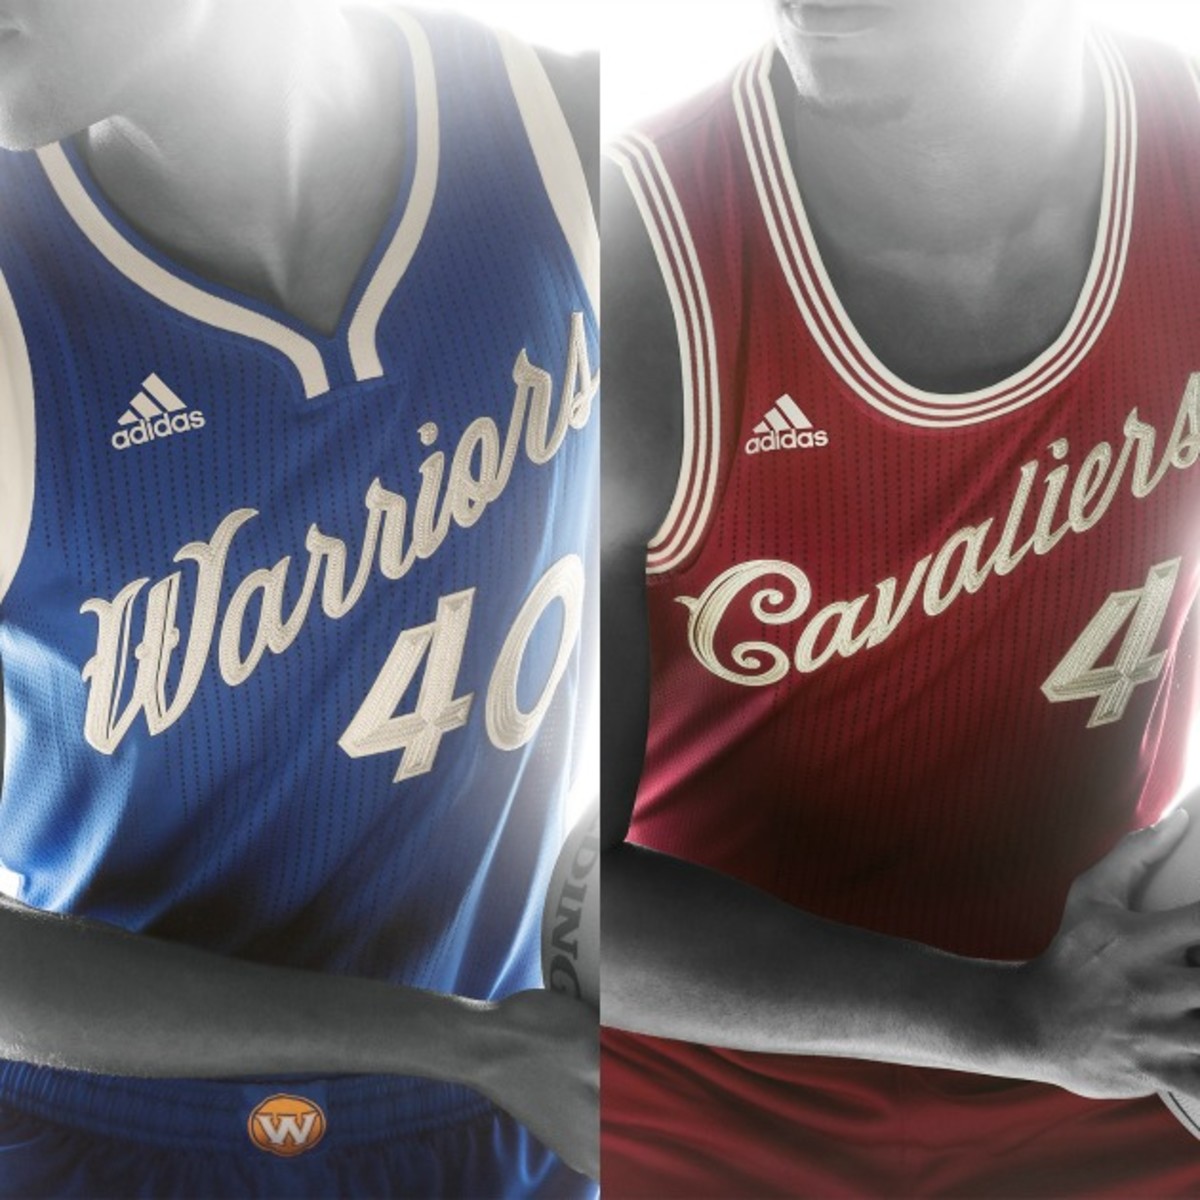 Adidas, Stance and the NBA Unveil Uniforms for 2015 NBA Christmas